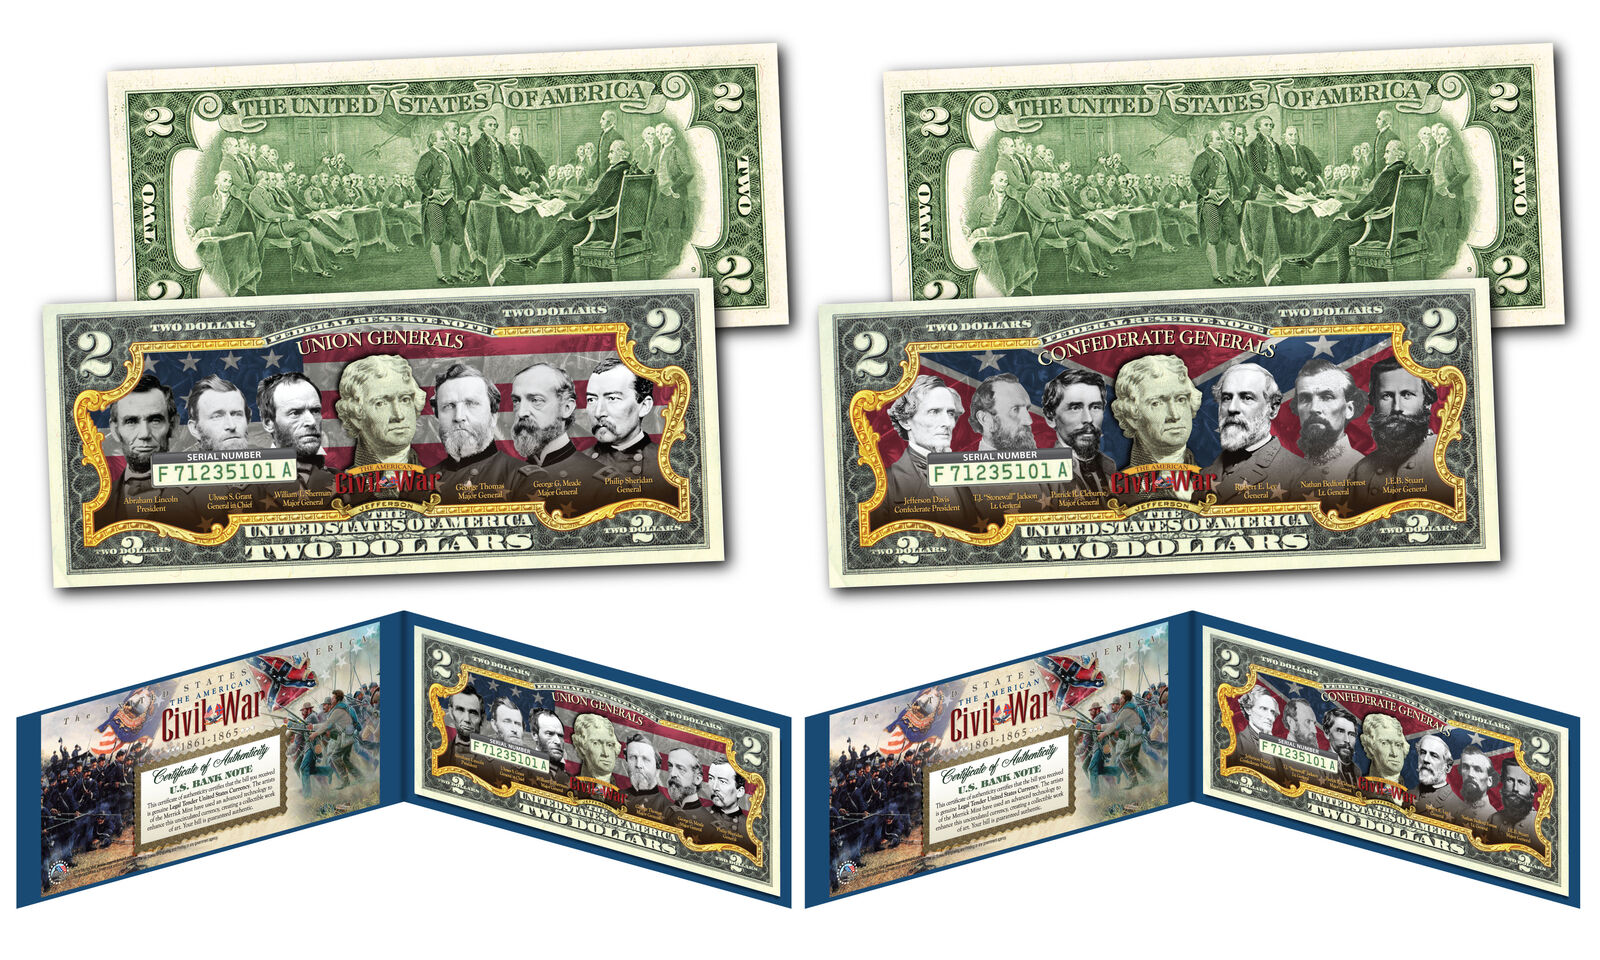 CONFEDERATE & UNION GENERALS of the American Civil War $2 U.S. Bills - SET OF 2